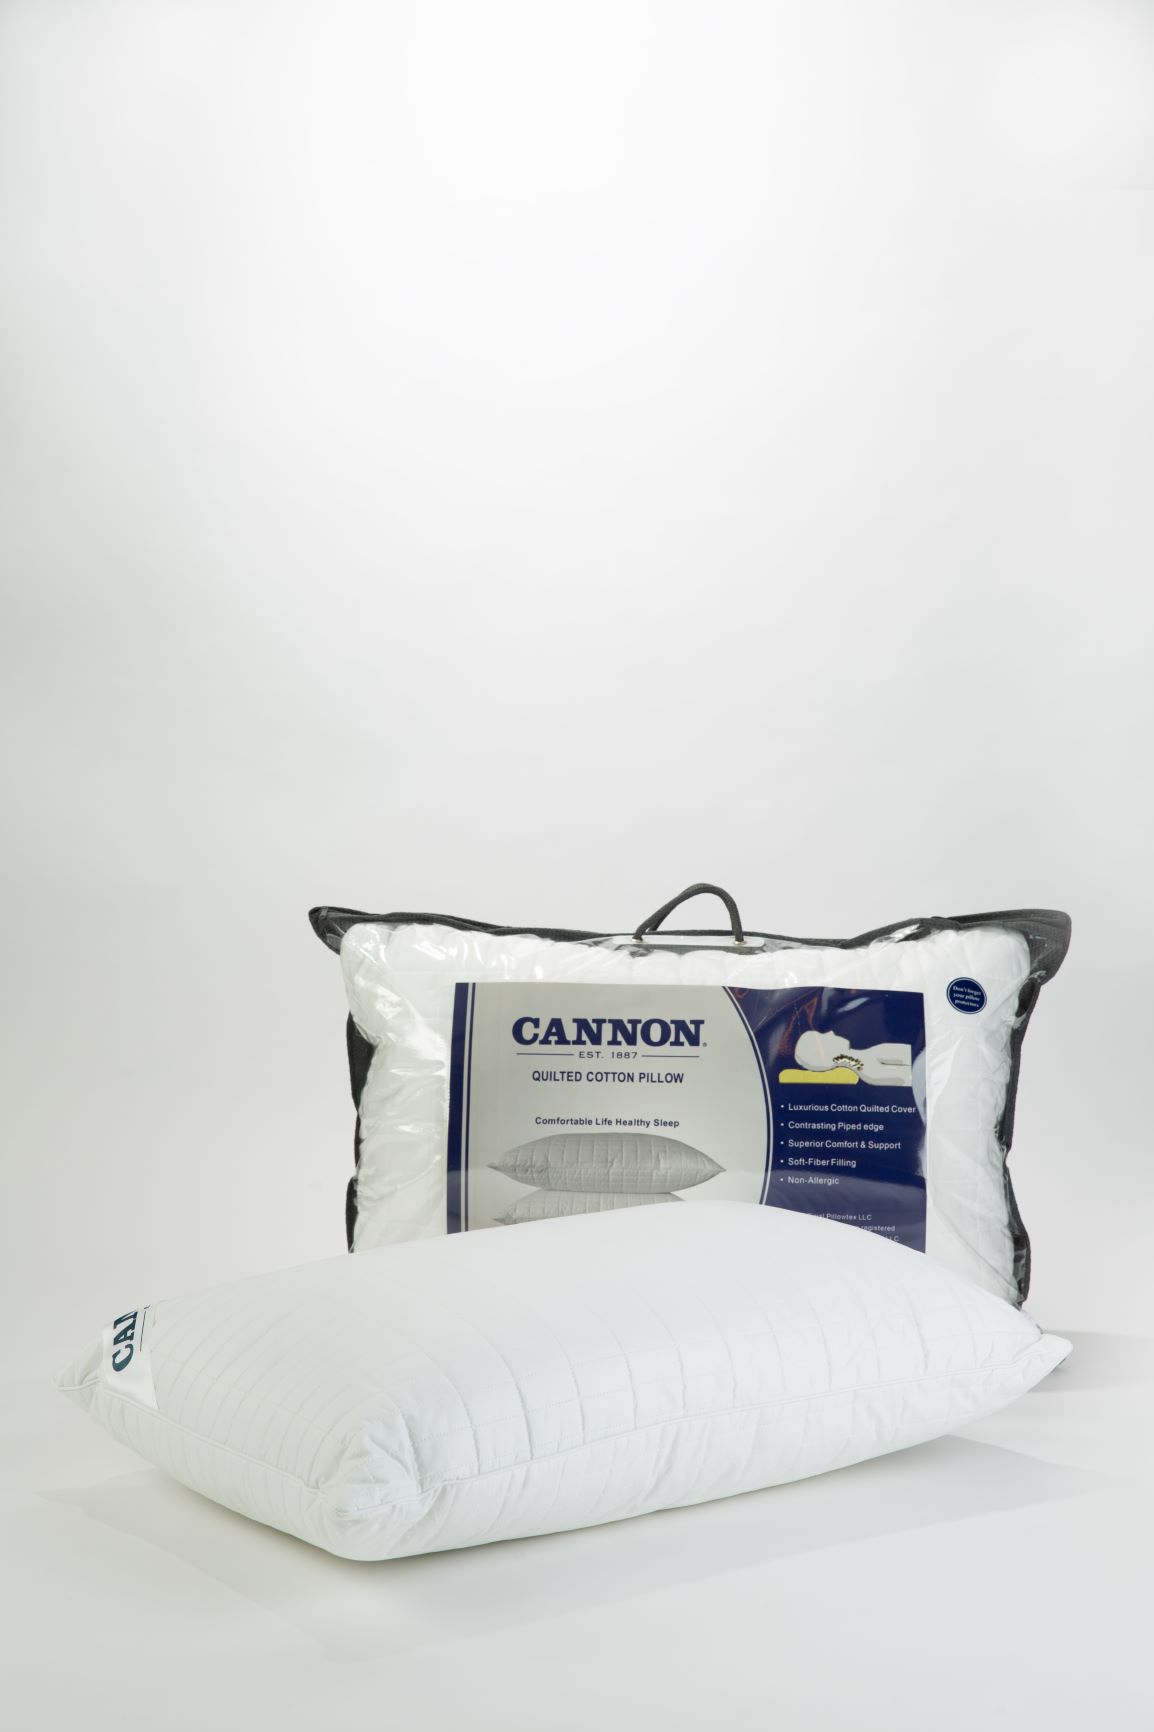 cannon memory foam pillow